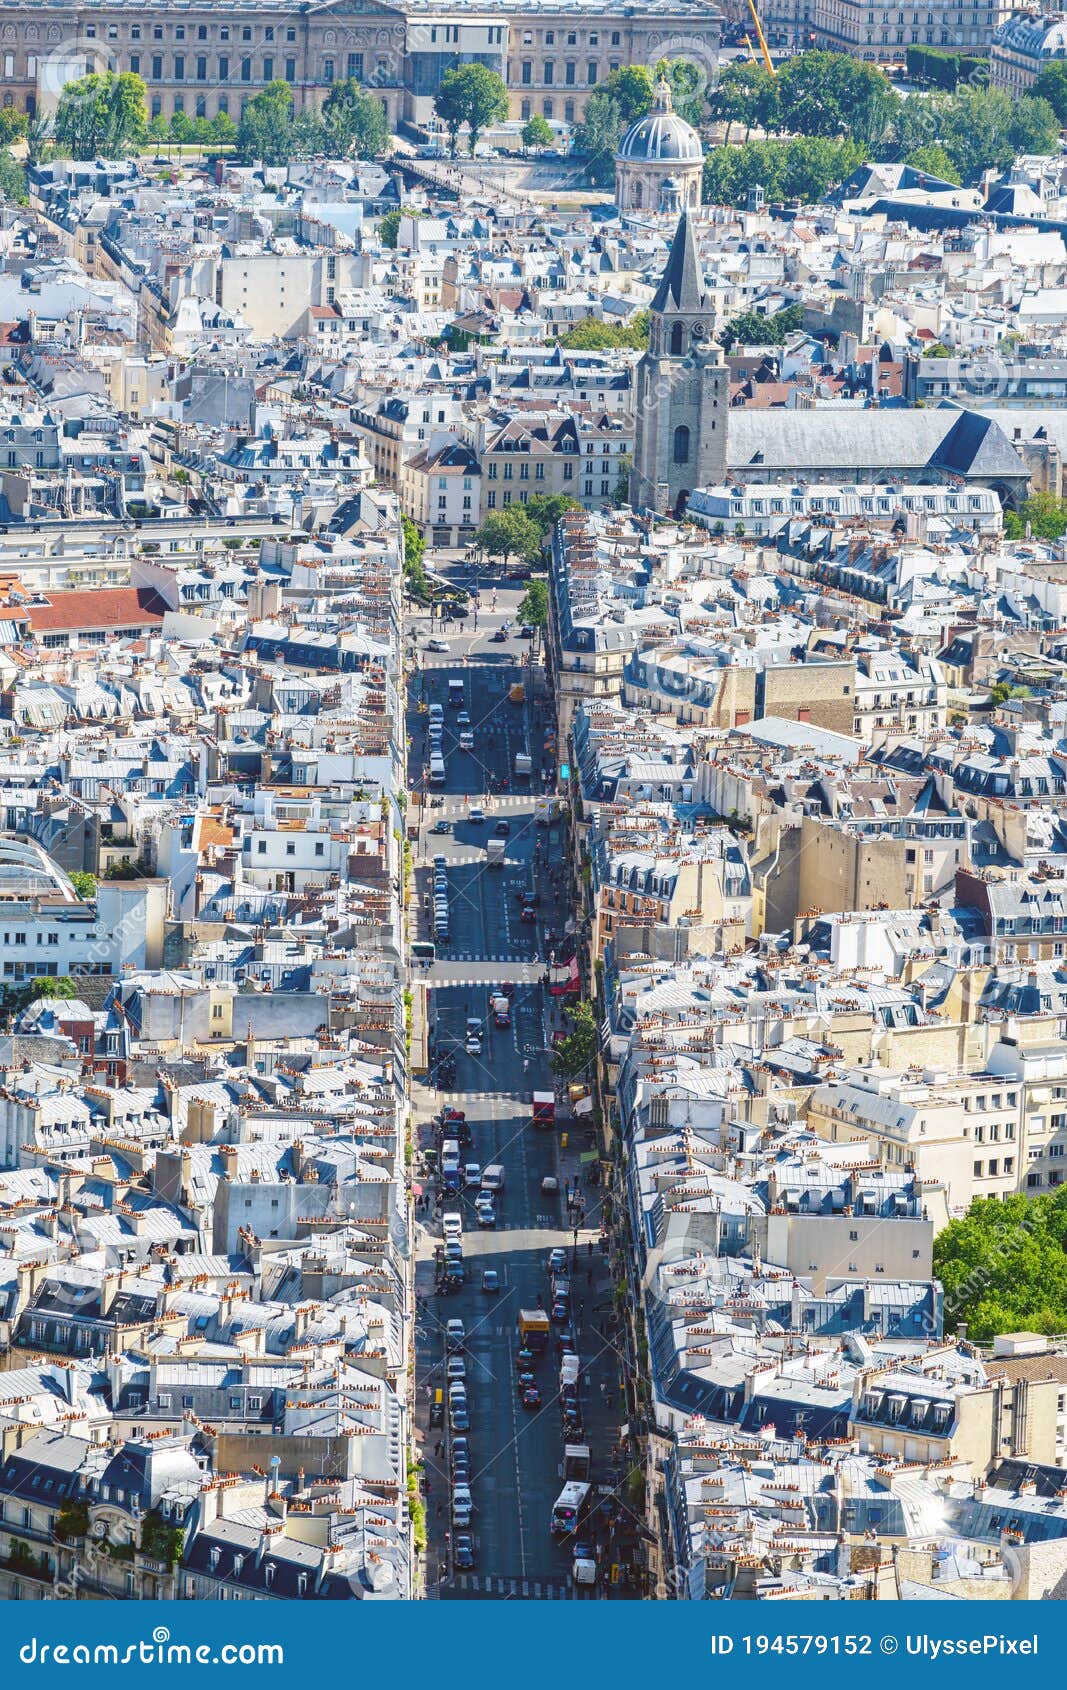 aerial view of rue de rennes and saint-germain-des-pres abbey in paris, france